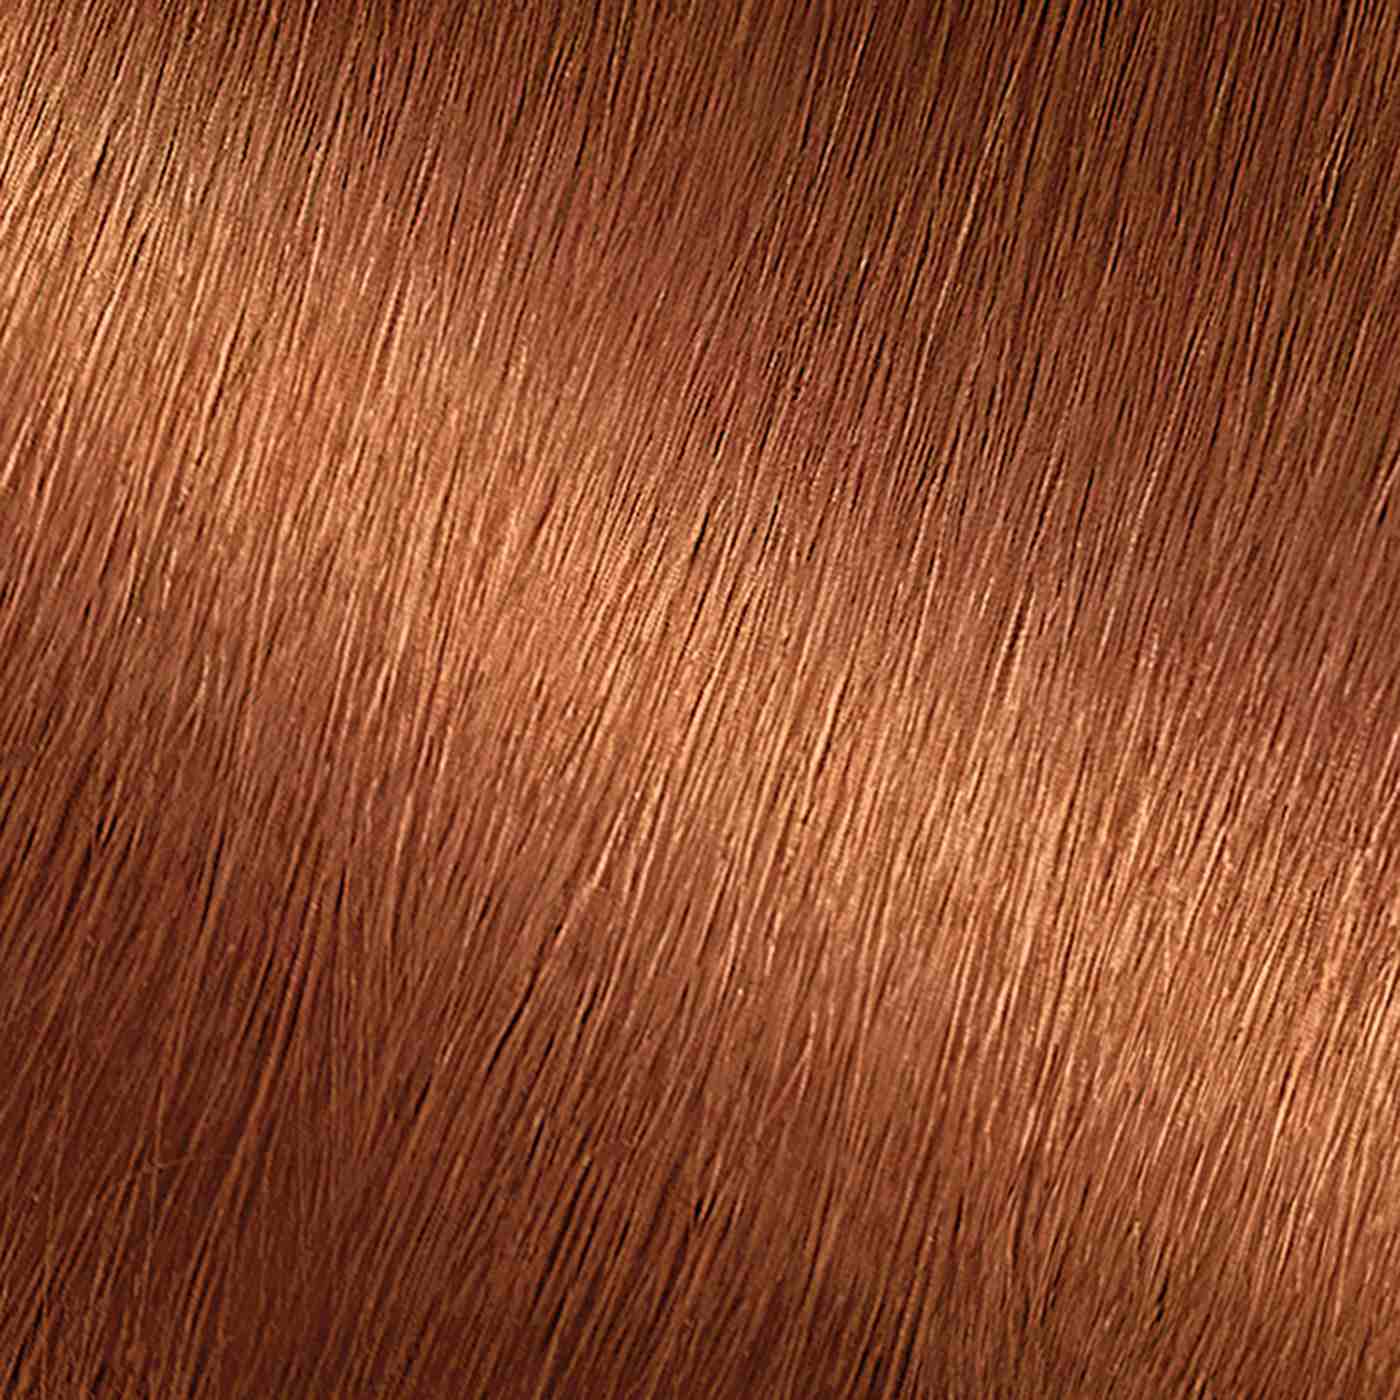 Garnier Nutrisse Nourishing Hair Color Creme with Triple Oils 643 Light Natural Copper; image 5 of 10